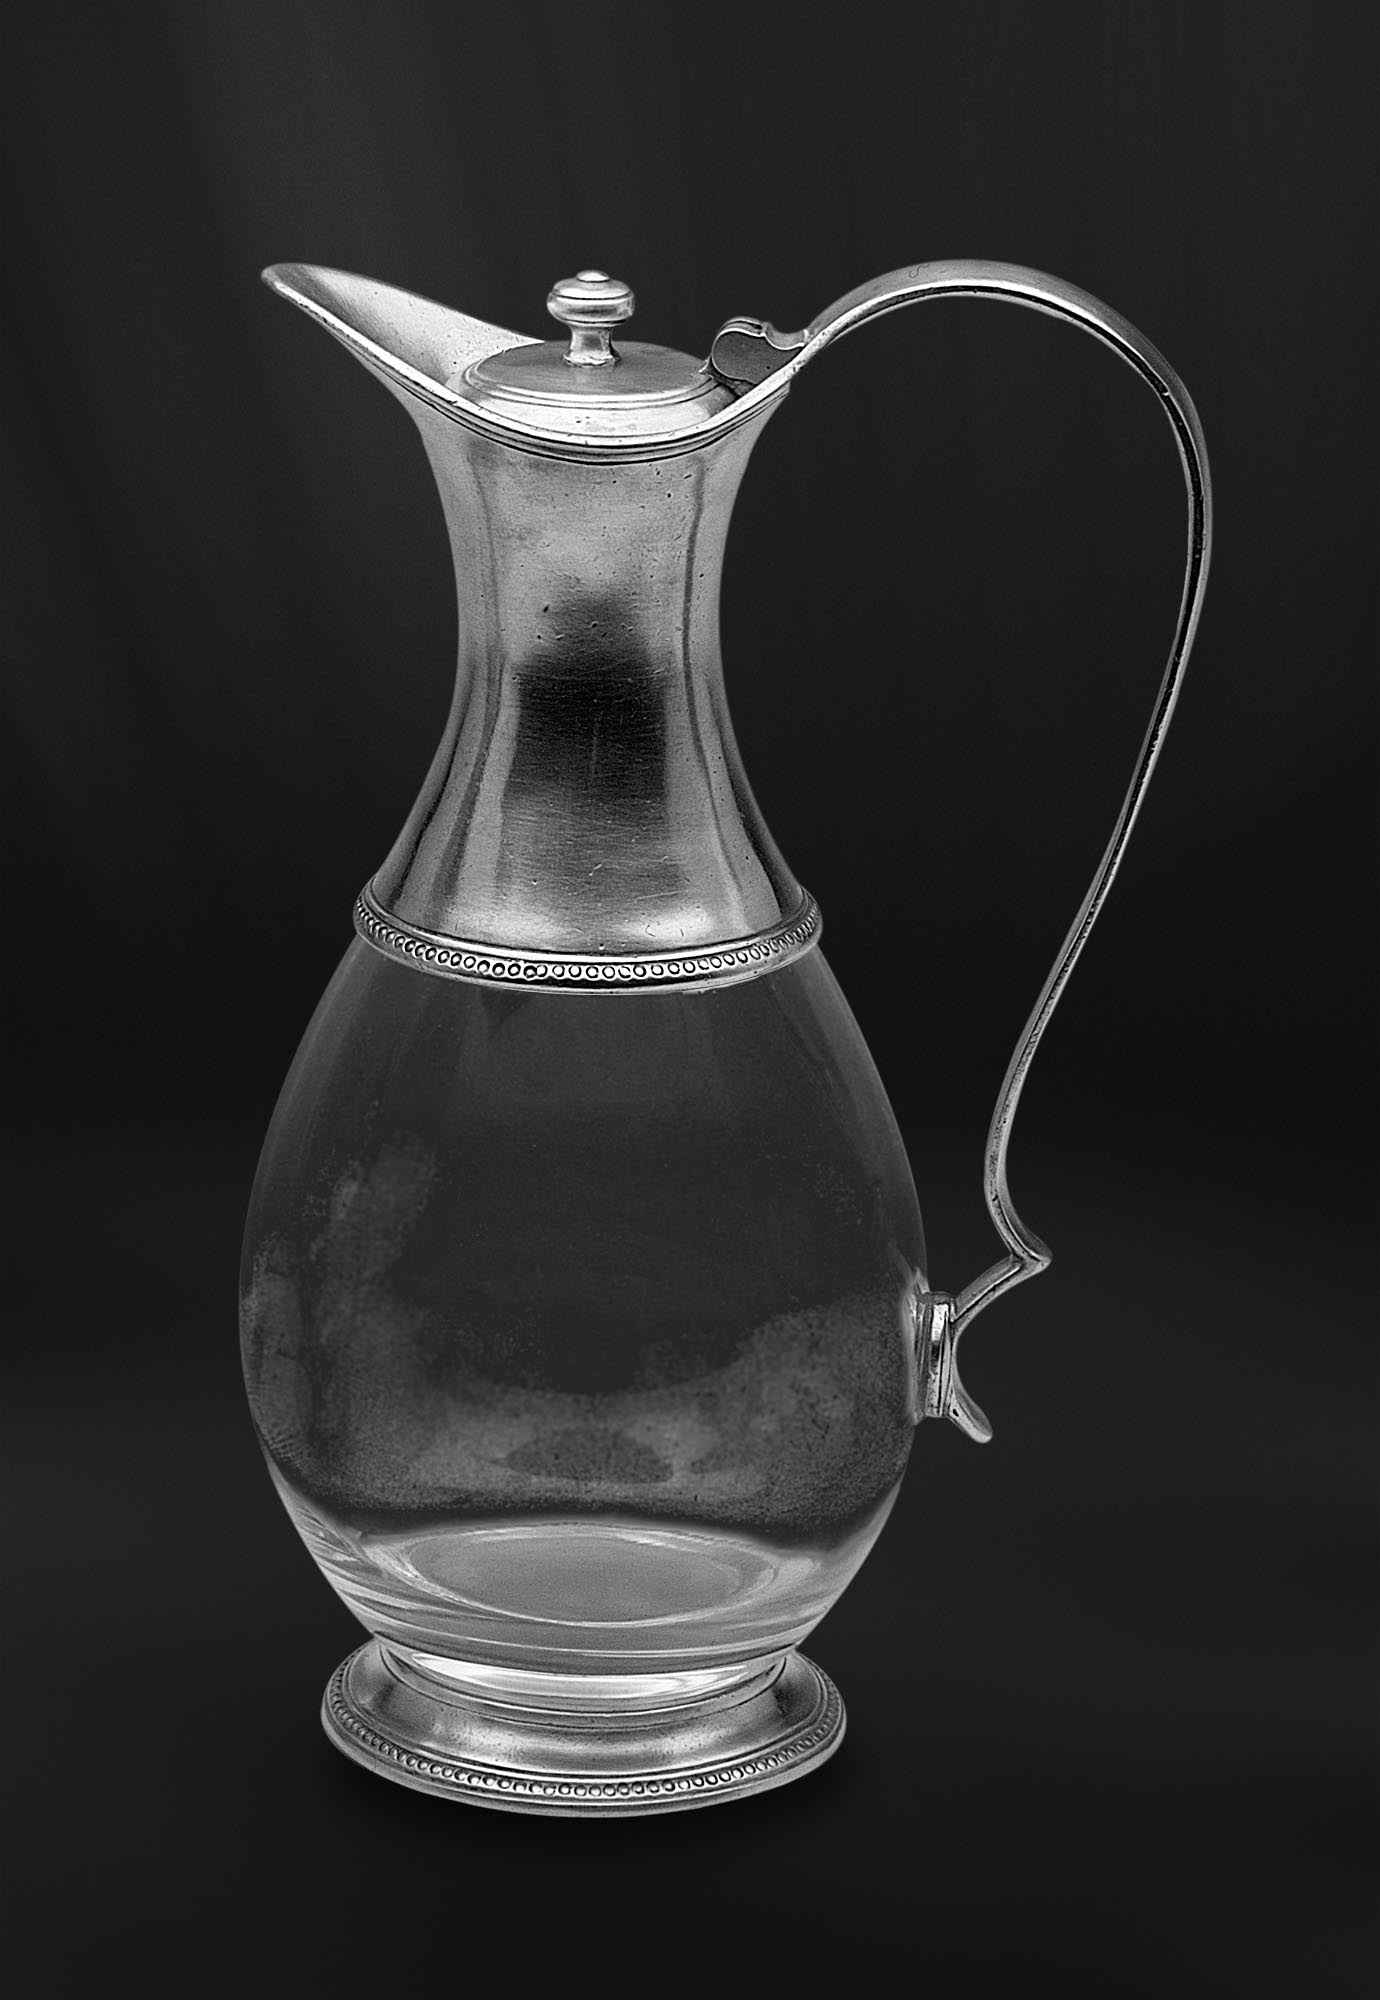 https://pewter-gt.com/wp-content/uploads/2016/07/jug-pewter-glass-lid-handmade-italy-italian-596.jpg